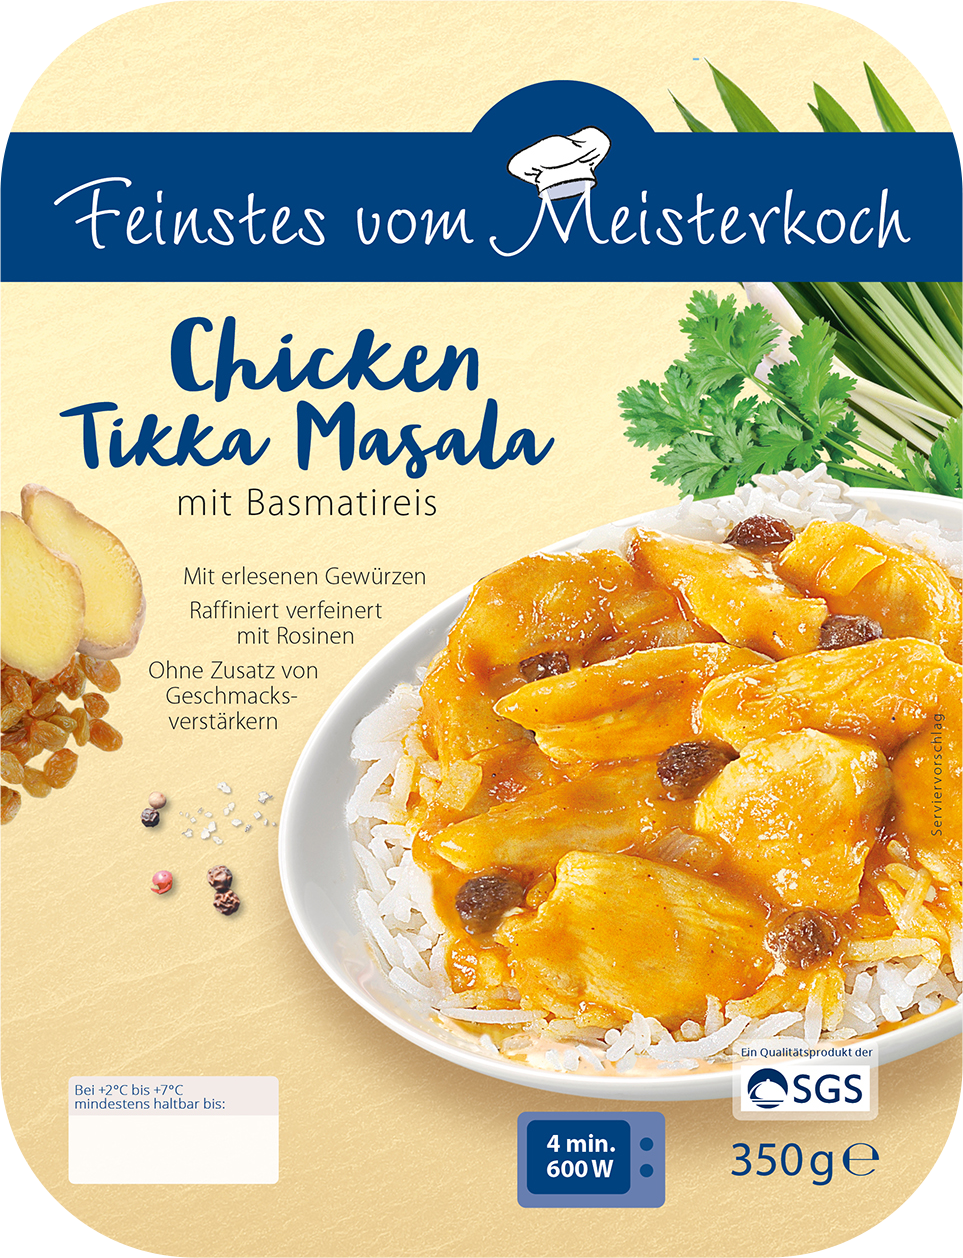 Chicken Tikka Massala